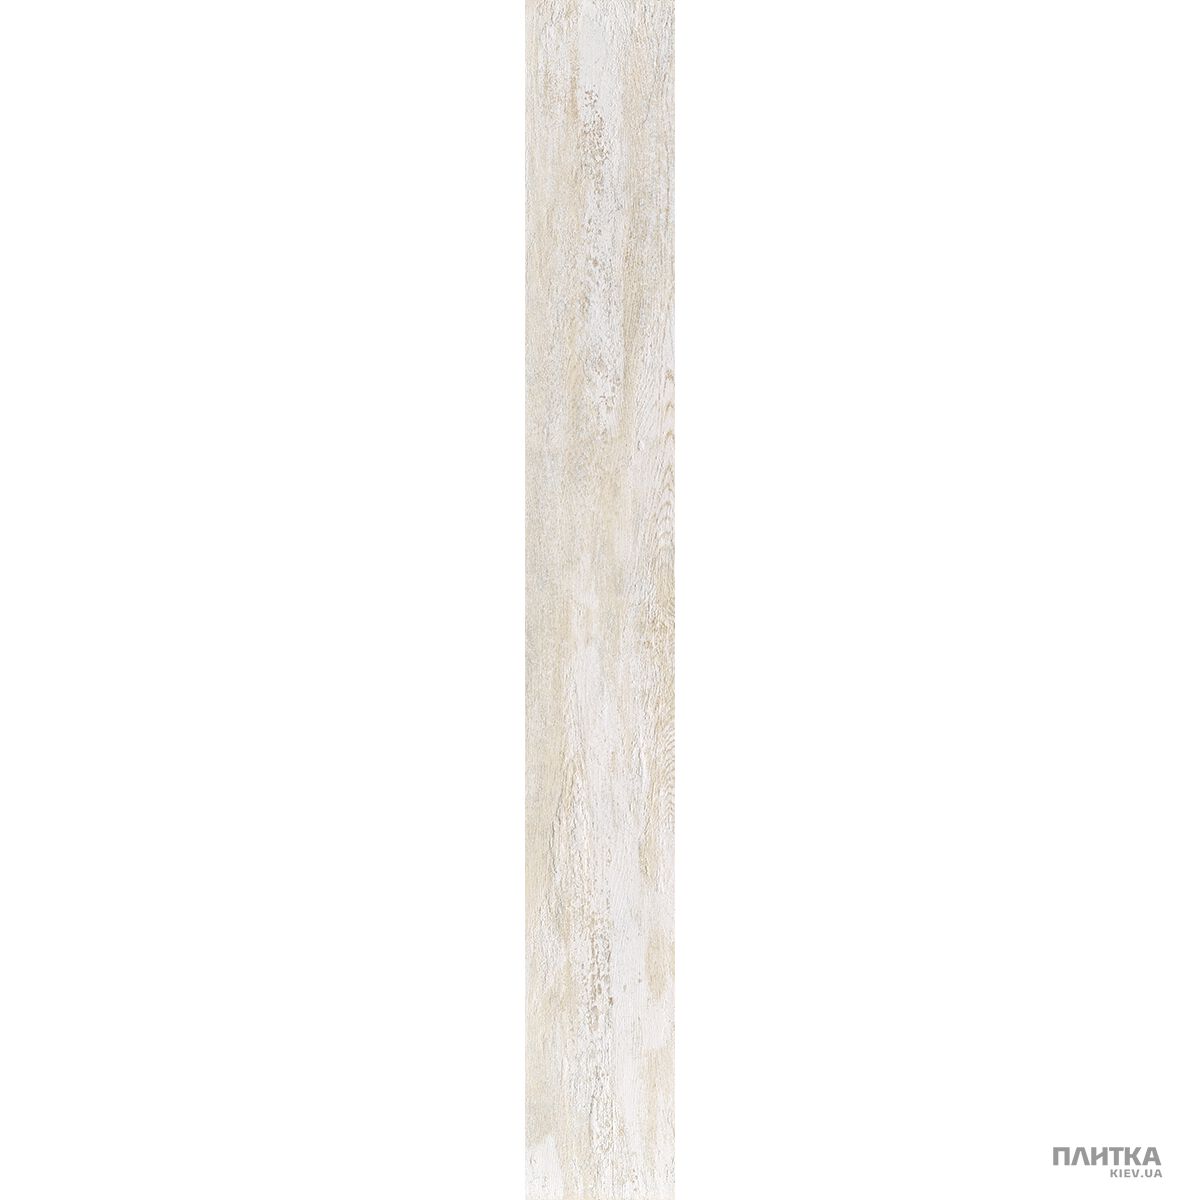 Керамогранит Leonardo Plank PLANK 1512W белый